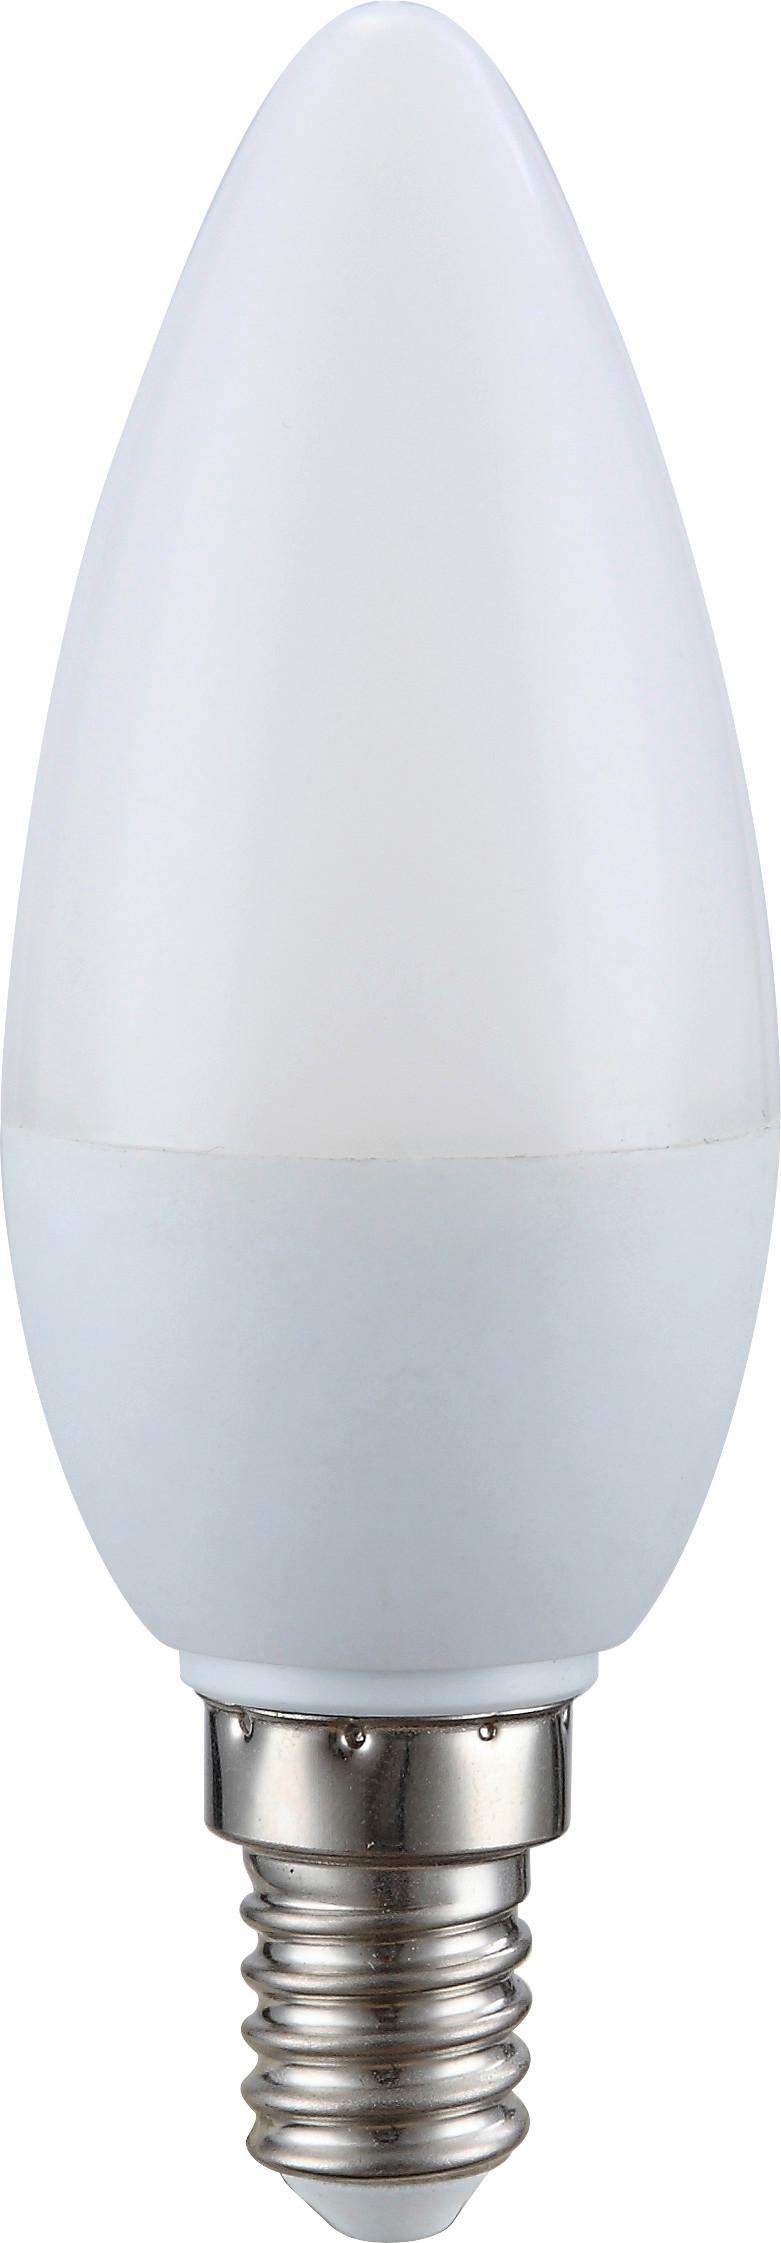 Led Žárovka E14, Max. 3 Watt, 5ks/bal. - bílá, plast (3,7/10cm) - Modern Living